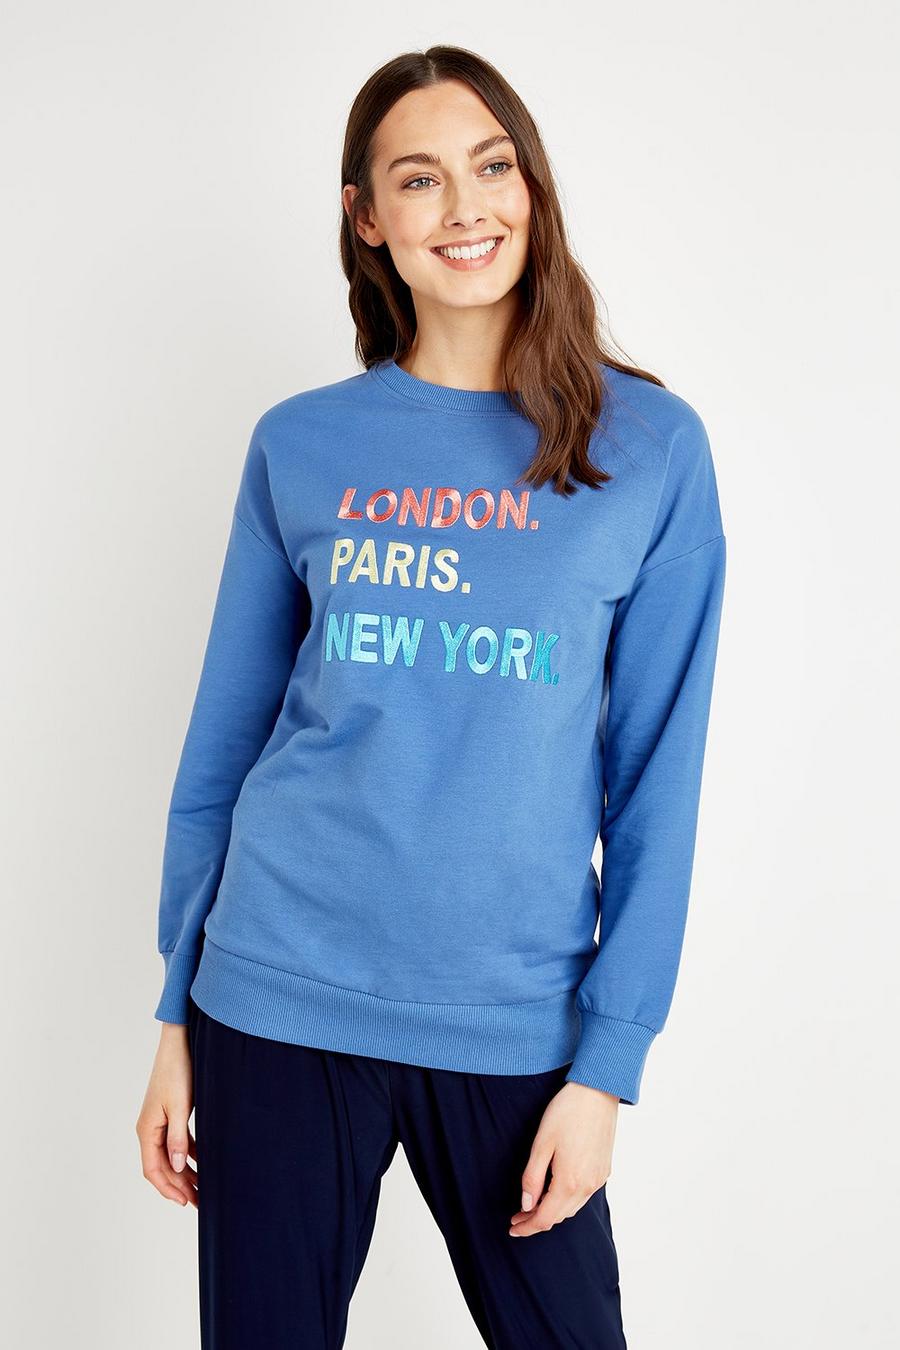 London Paris New York Sweatshirt